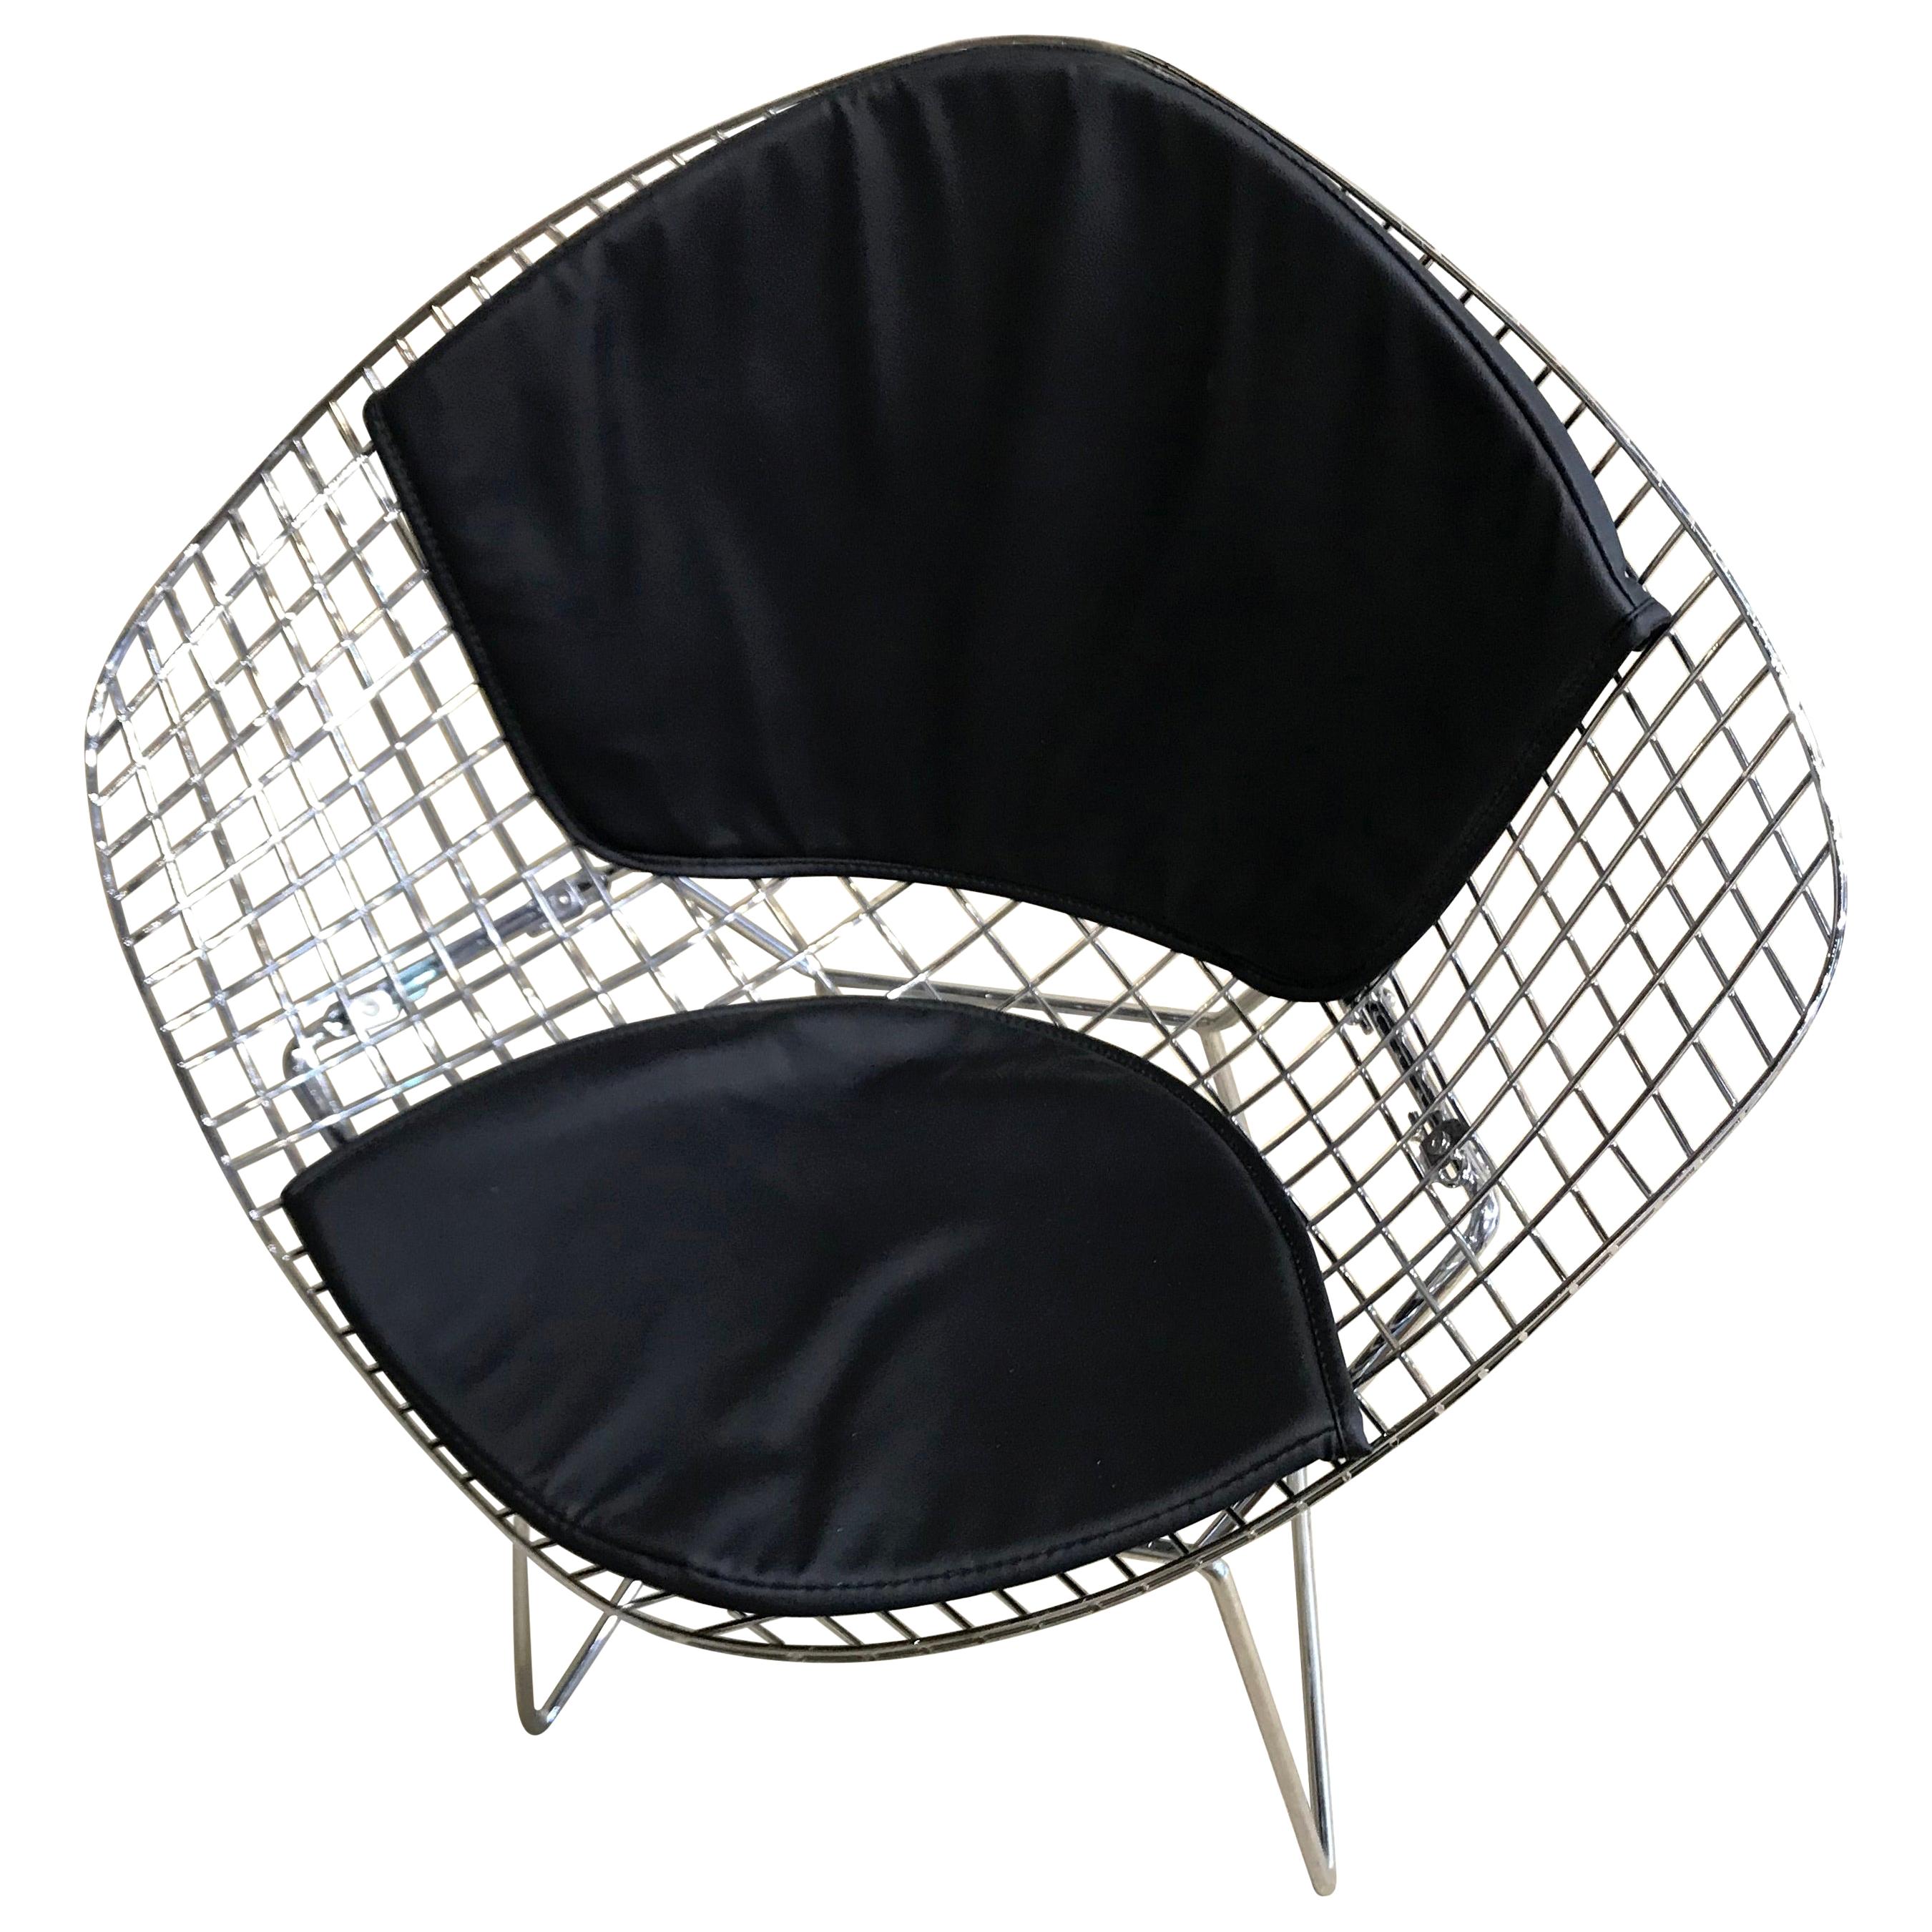 Harry Bertoïa's Chair, "Fauteuil Diamant"